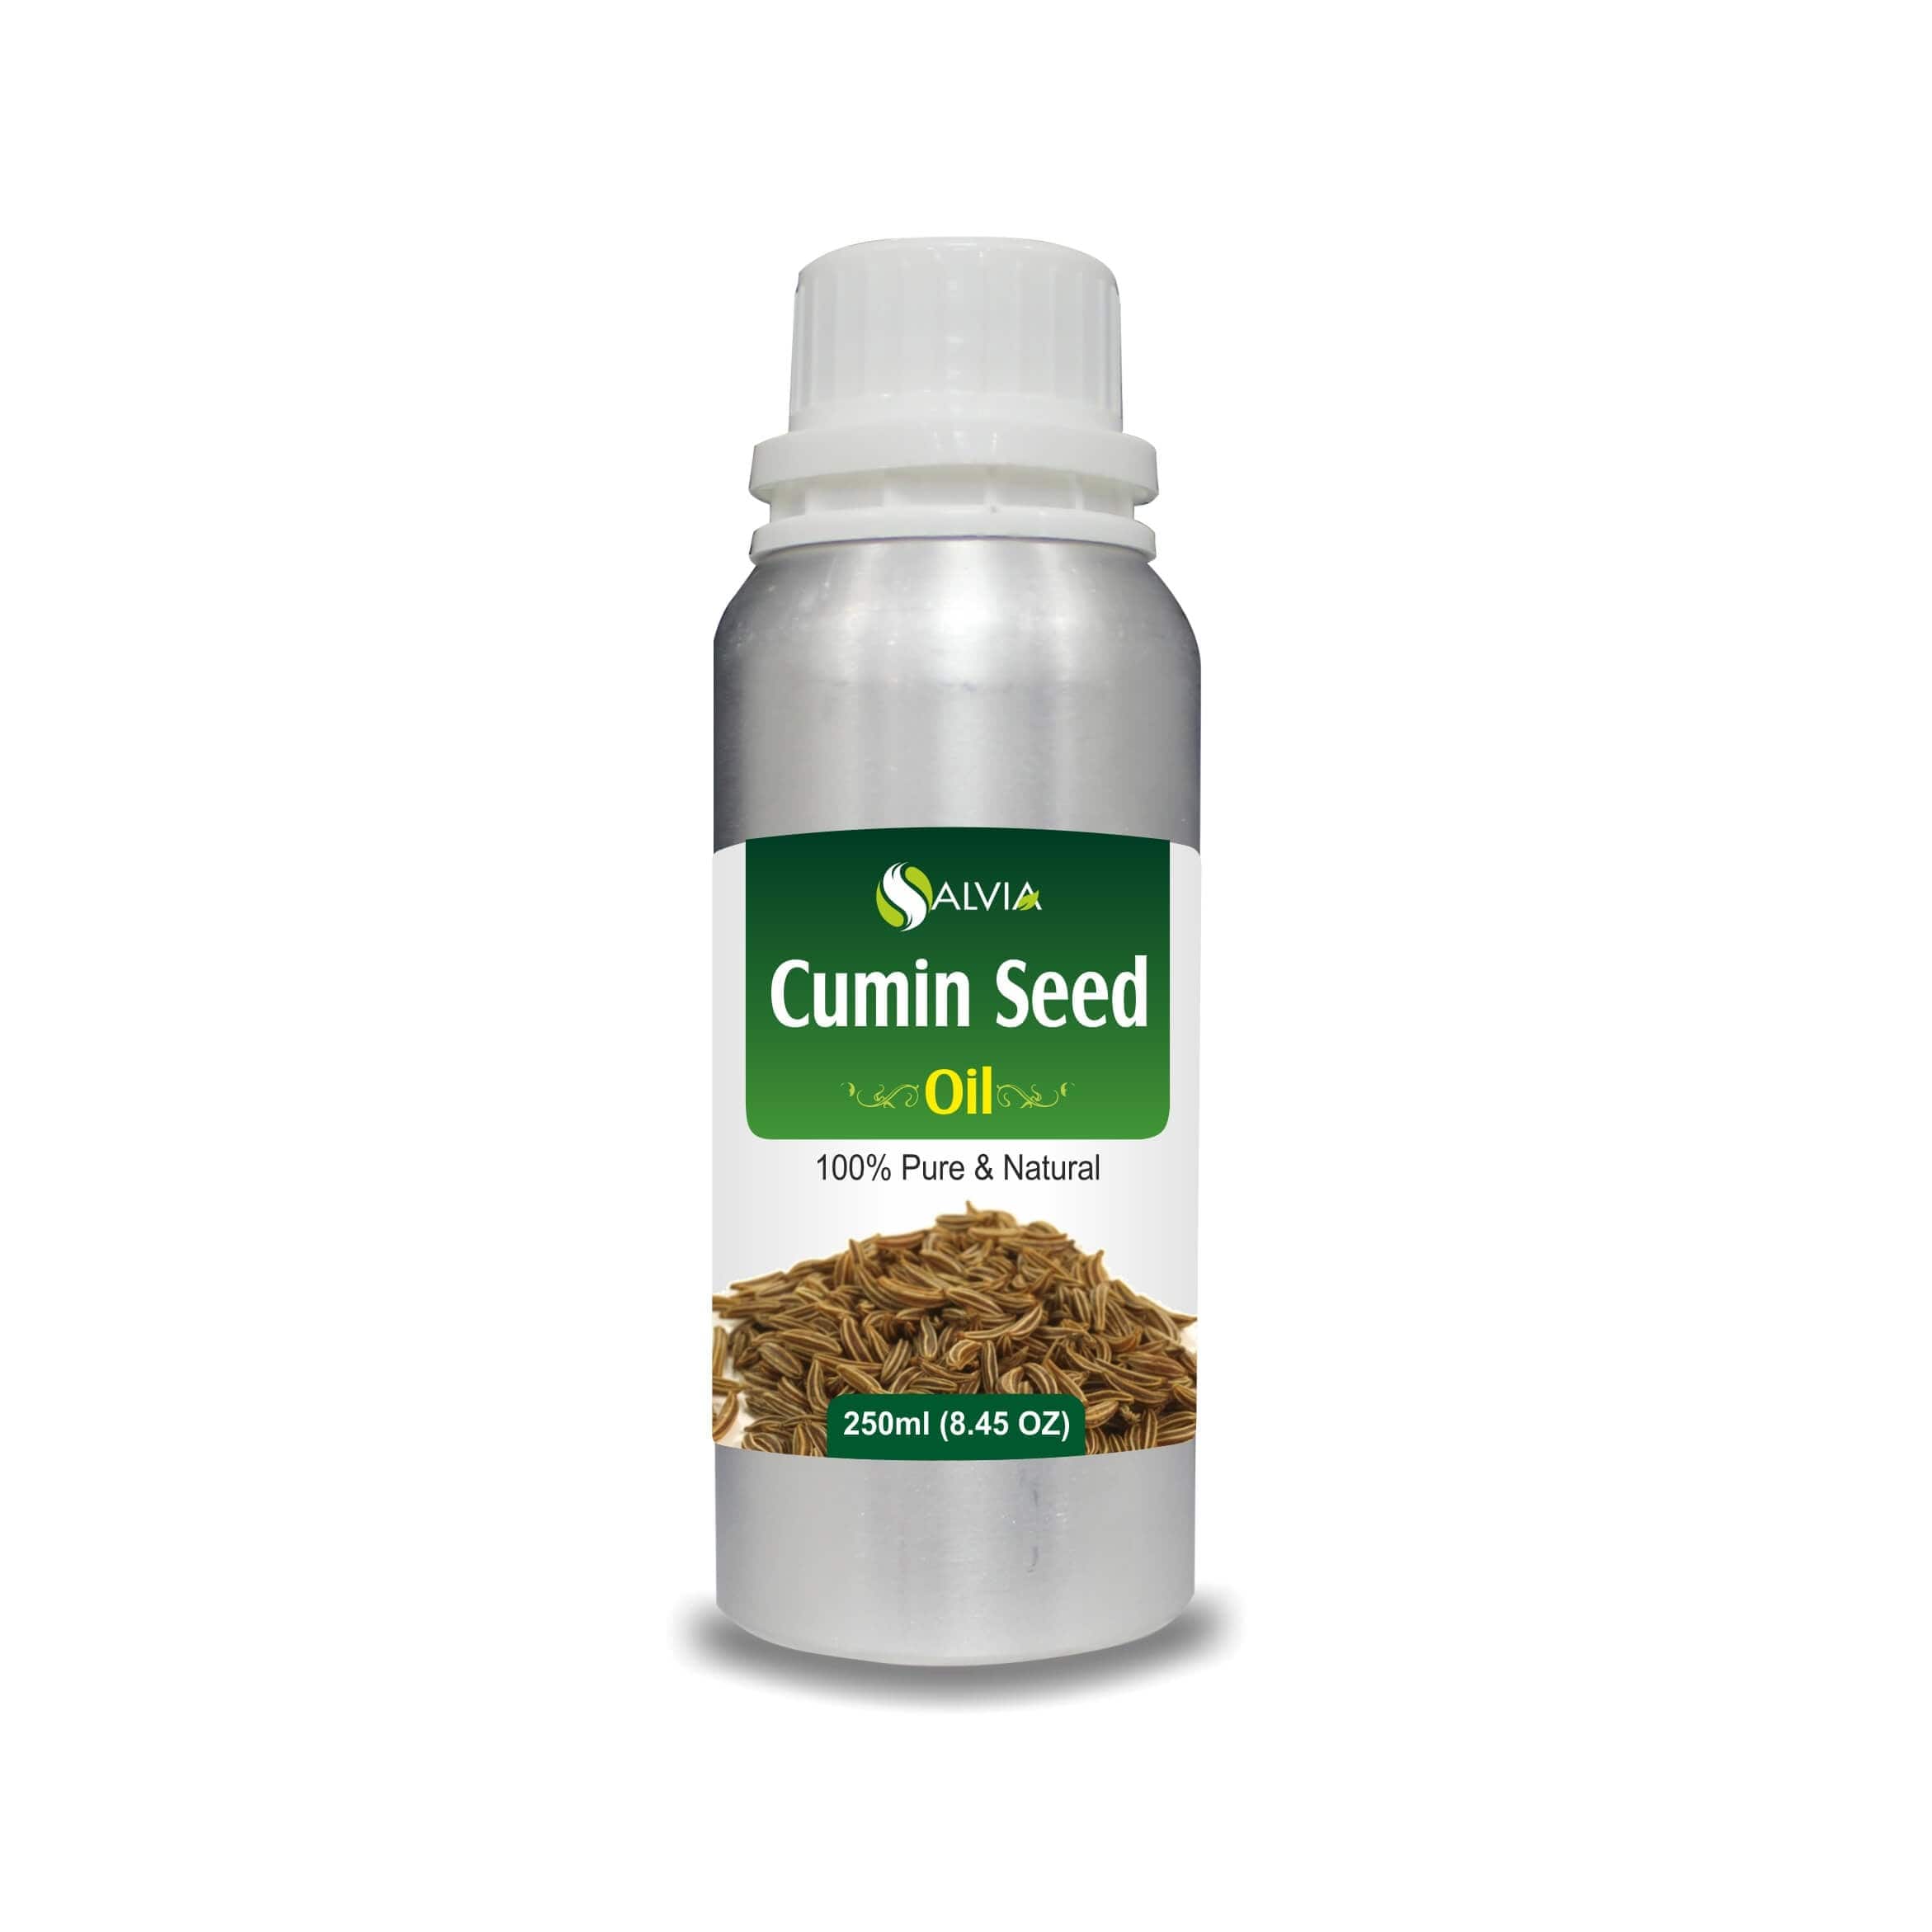 Salvia Natural Essential Oils 250ml Cumin Seed Oil (Cuminum Cyminum) 100% Natural Pure Essential Oil